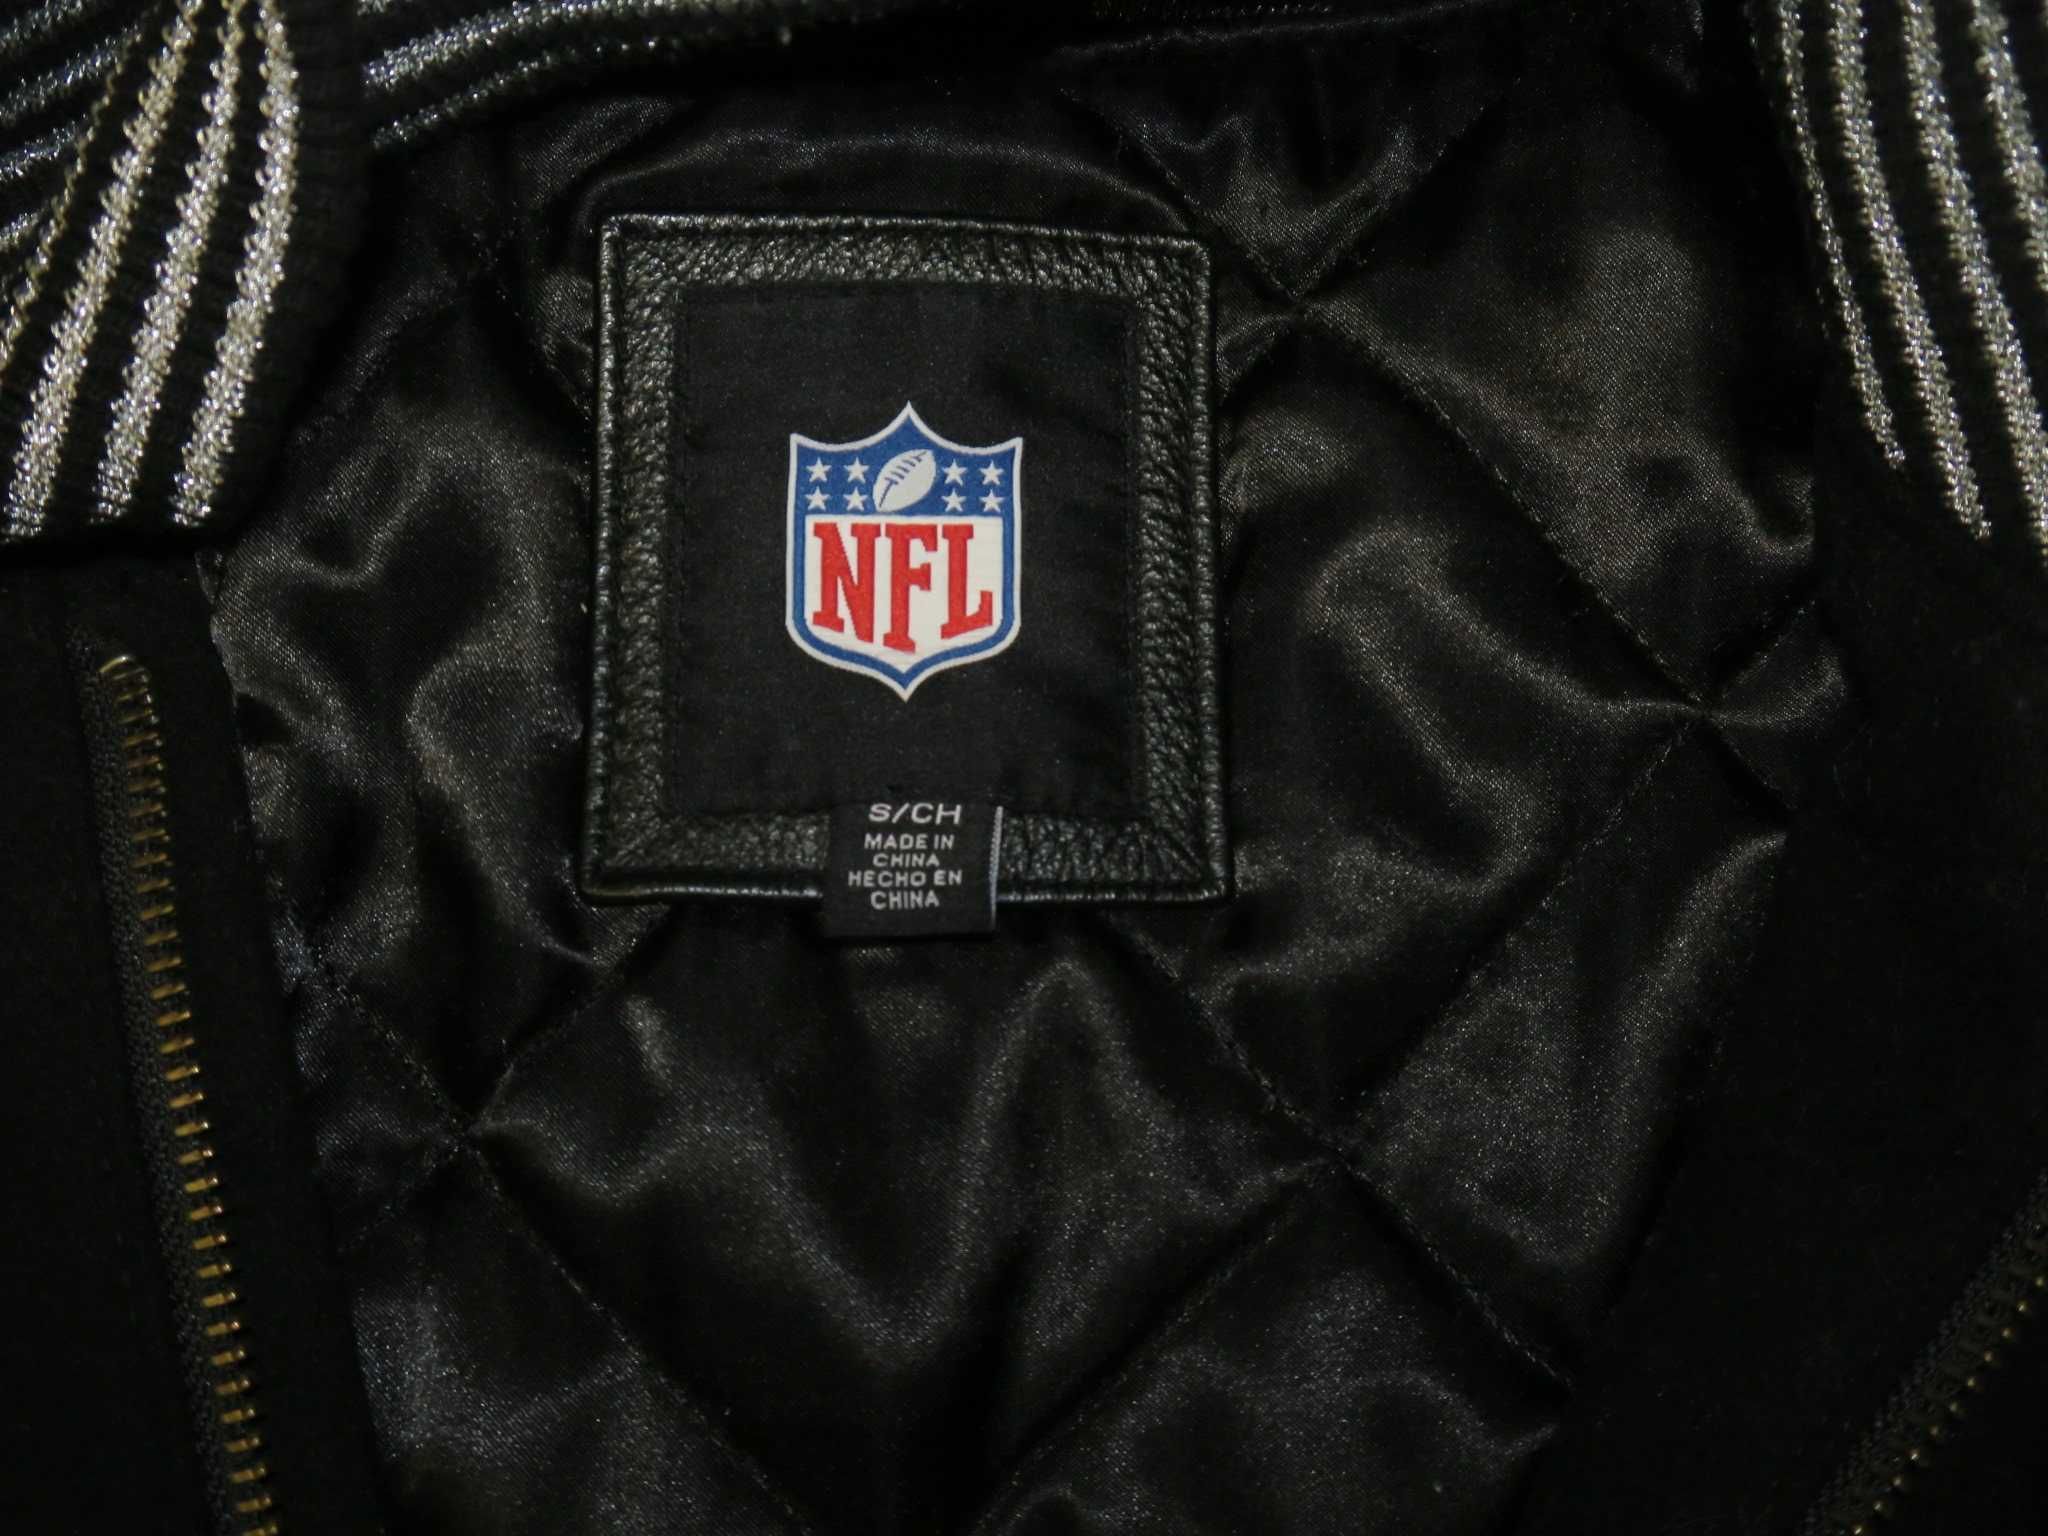 NFL kurtka Super Bowl bomberka 2013